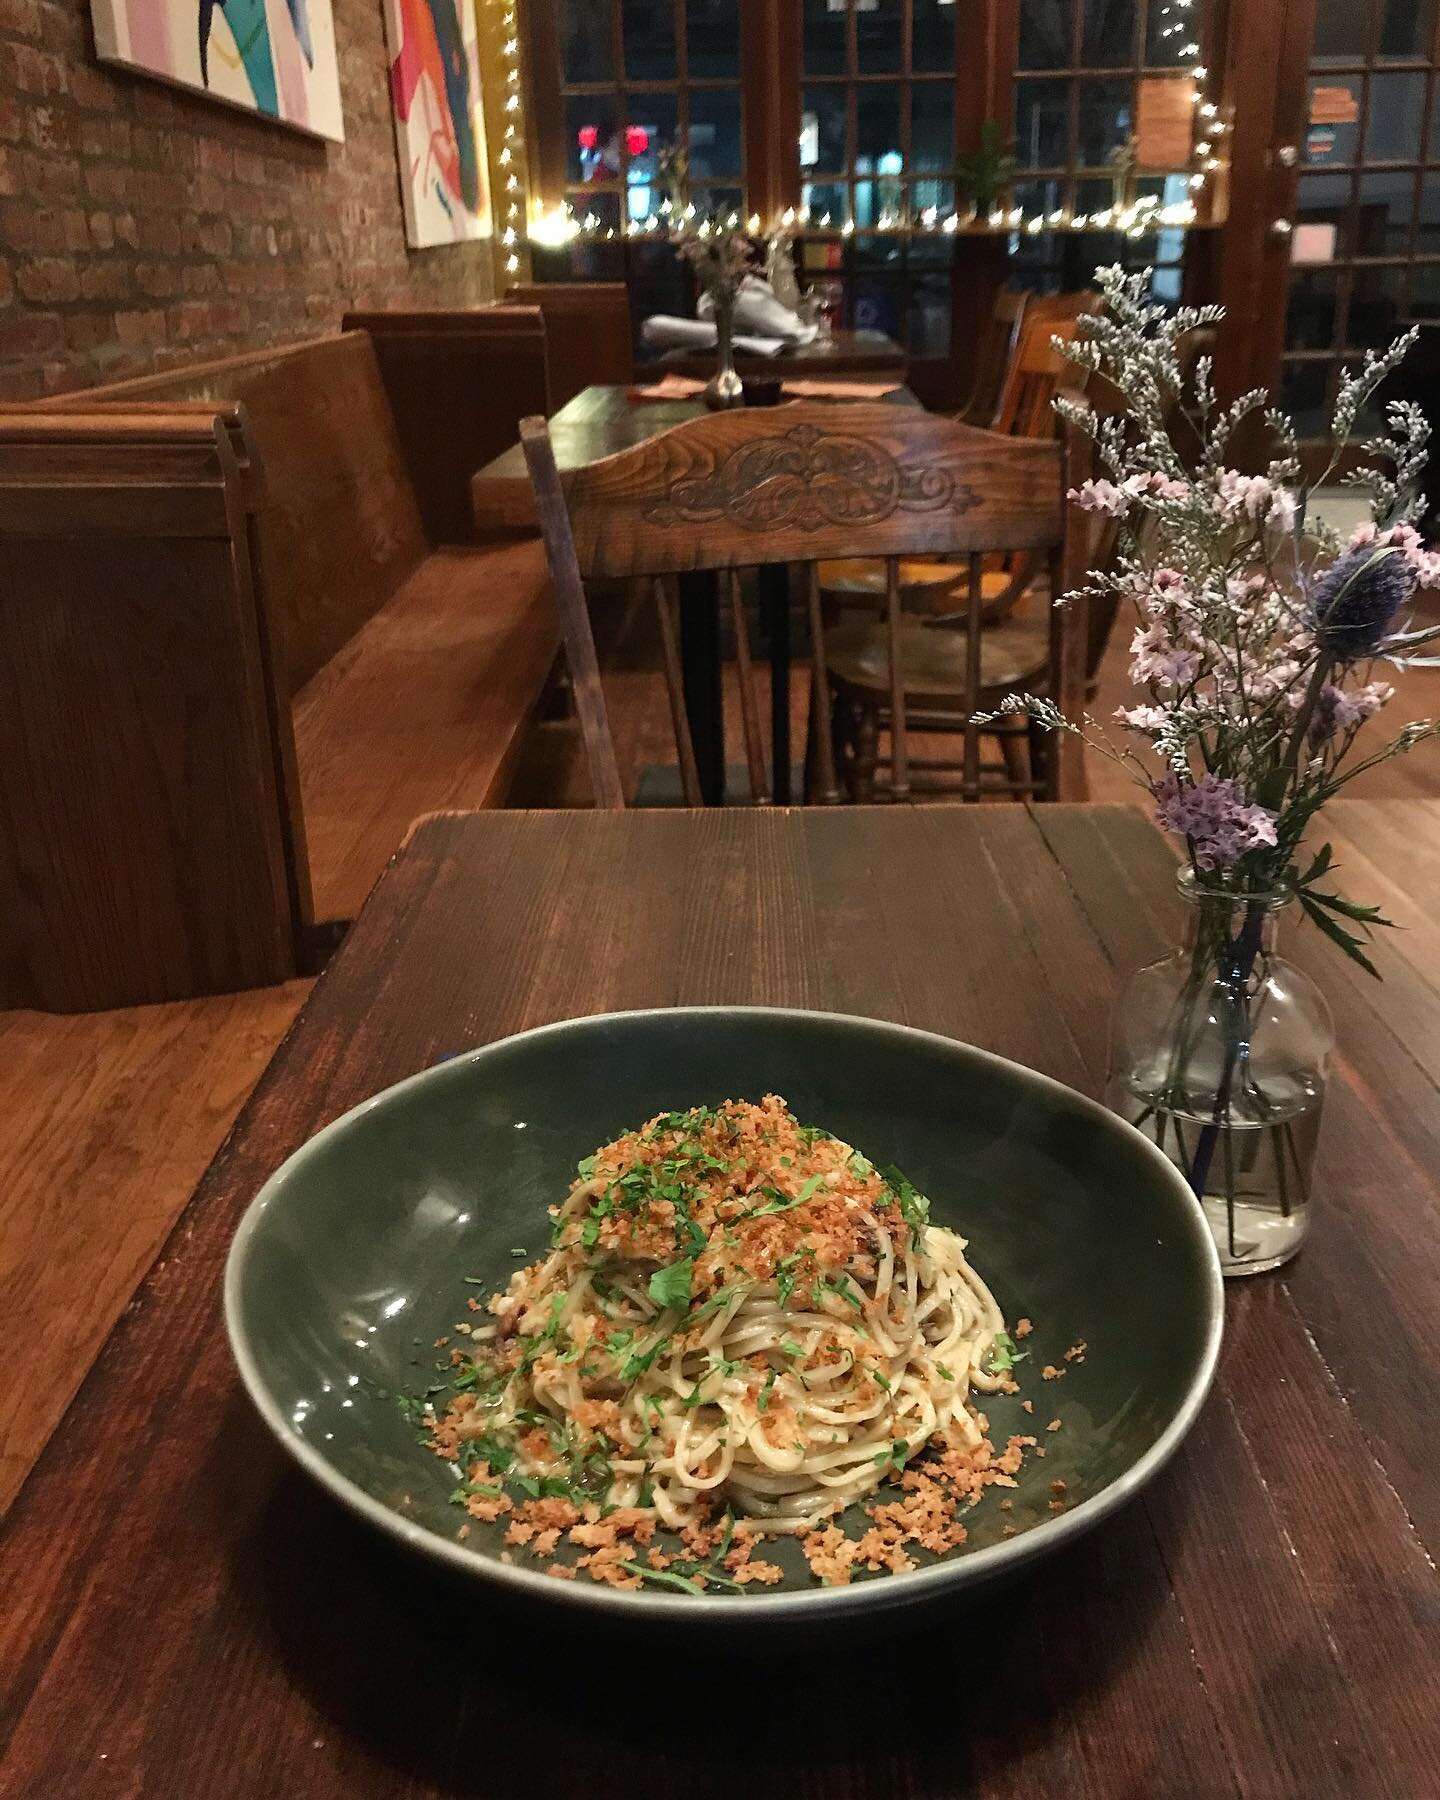 Spaghetti con la mollica (anchovy + breadcrumbs). Come by and enjoy a delicious bowl of fresh pasta at Macosa Trattoria. We are open today 5 pm to 11pm!
-
-
-
-
-
-

-
-
-
-
 #pappardelle #pastafresca #authenticitalianfood #comfortfood #brooklynresta